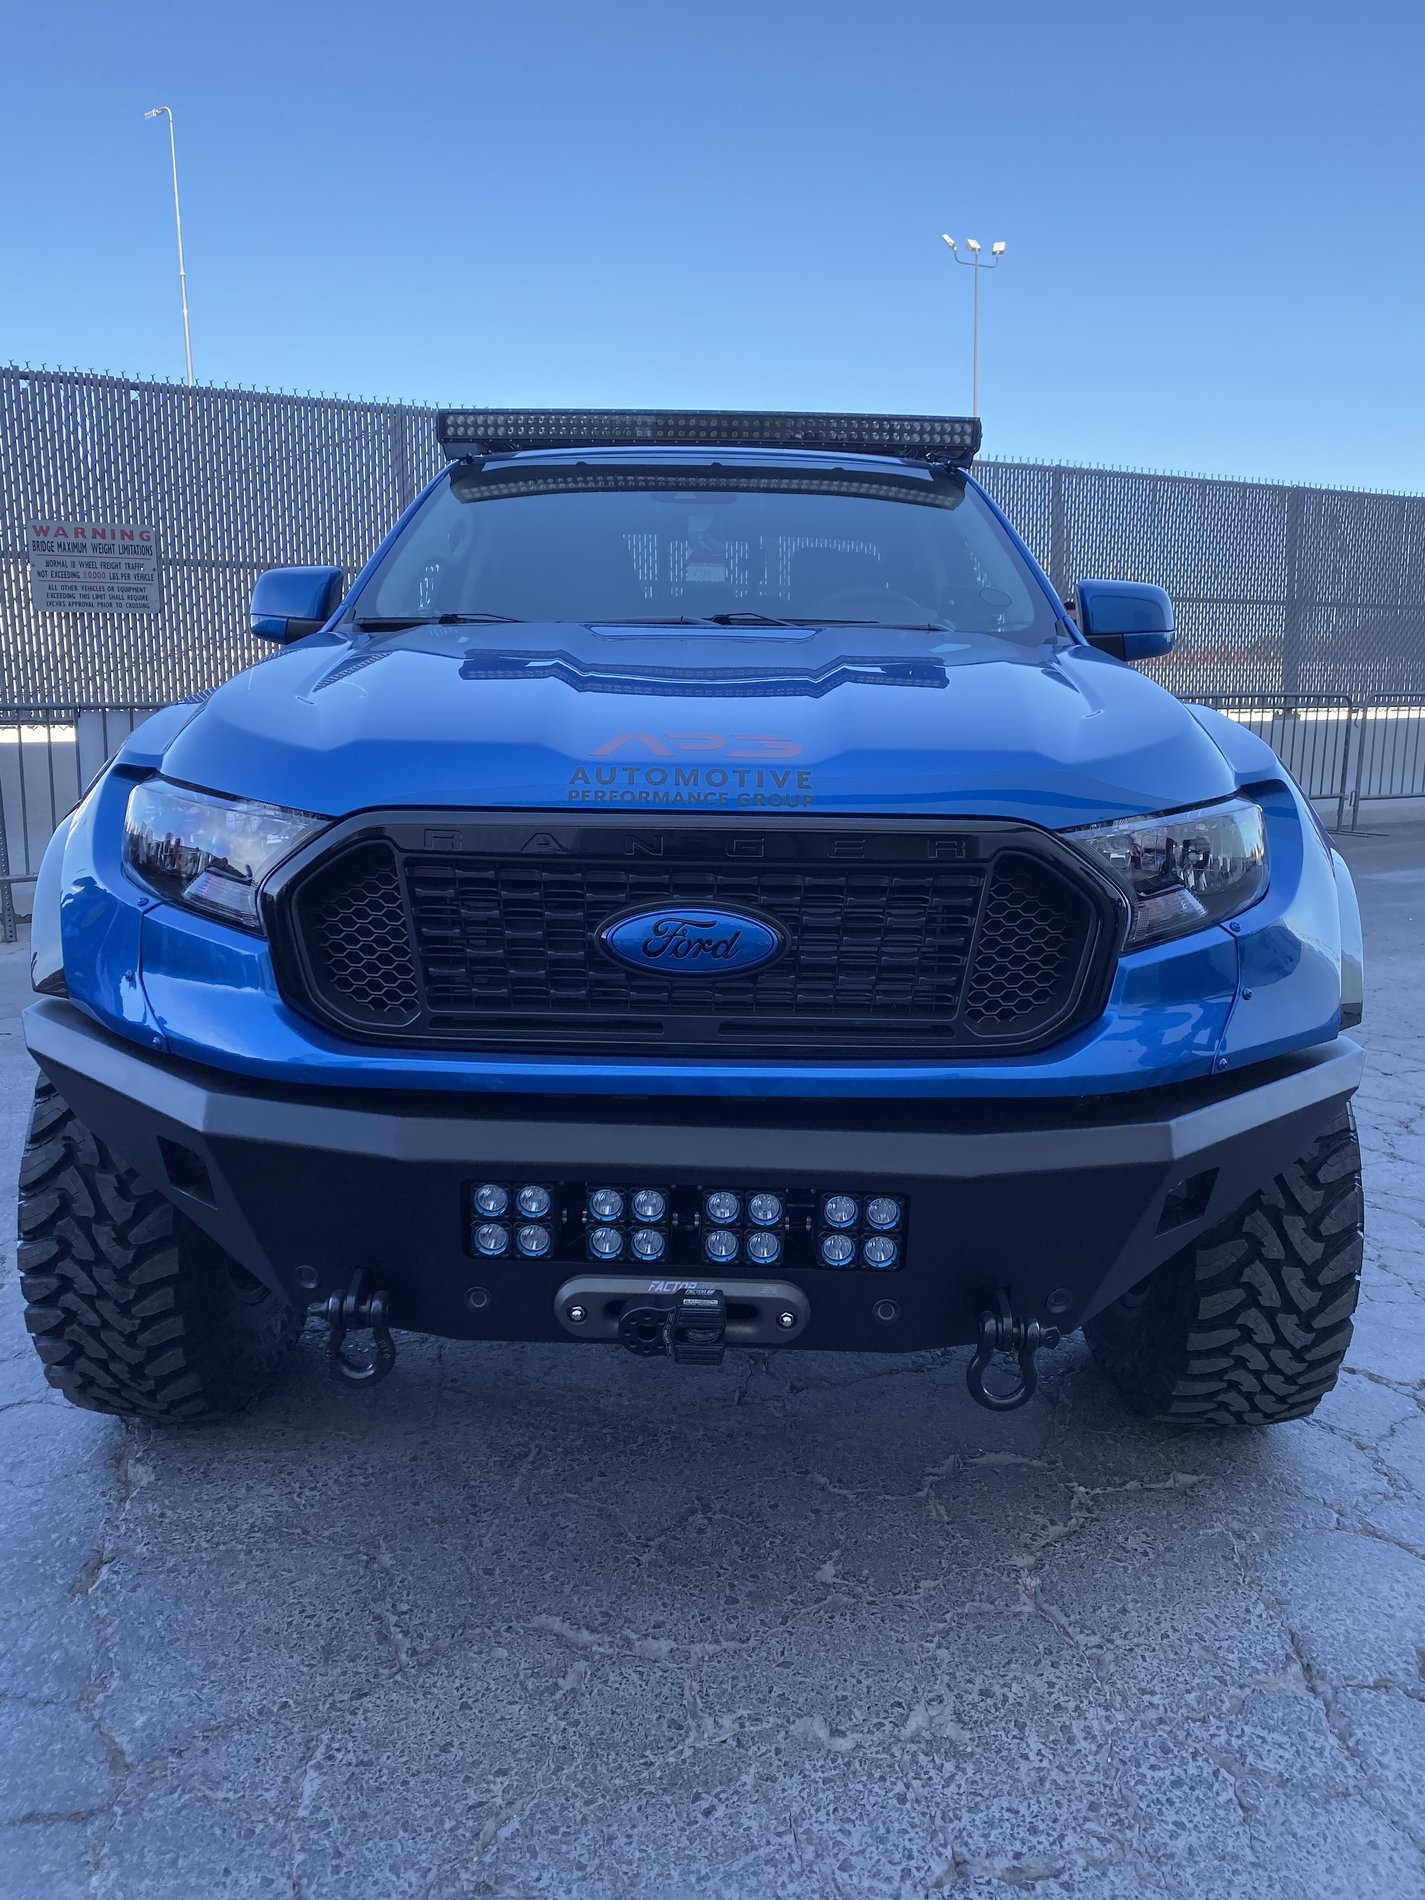 Ford Ranger SEMA 2019 3B5406E1-420F-4FC8-BE63-3A54CA27C774